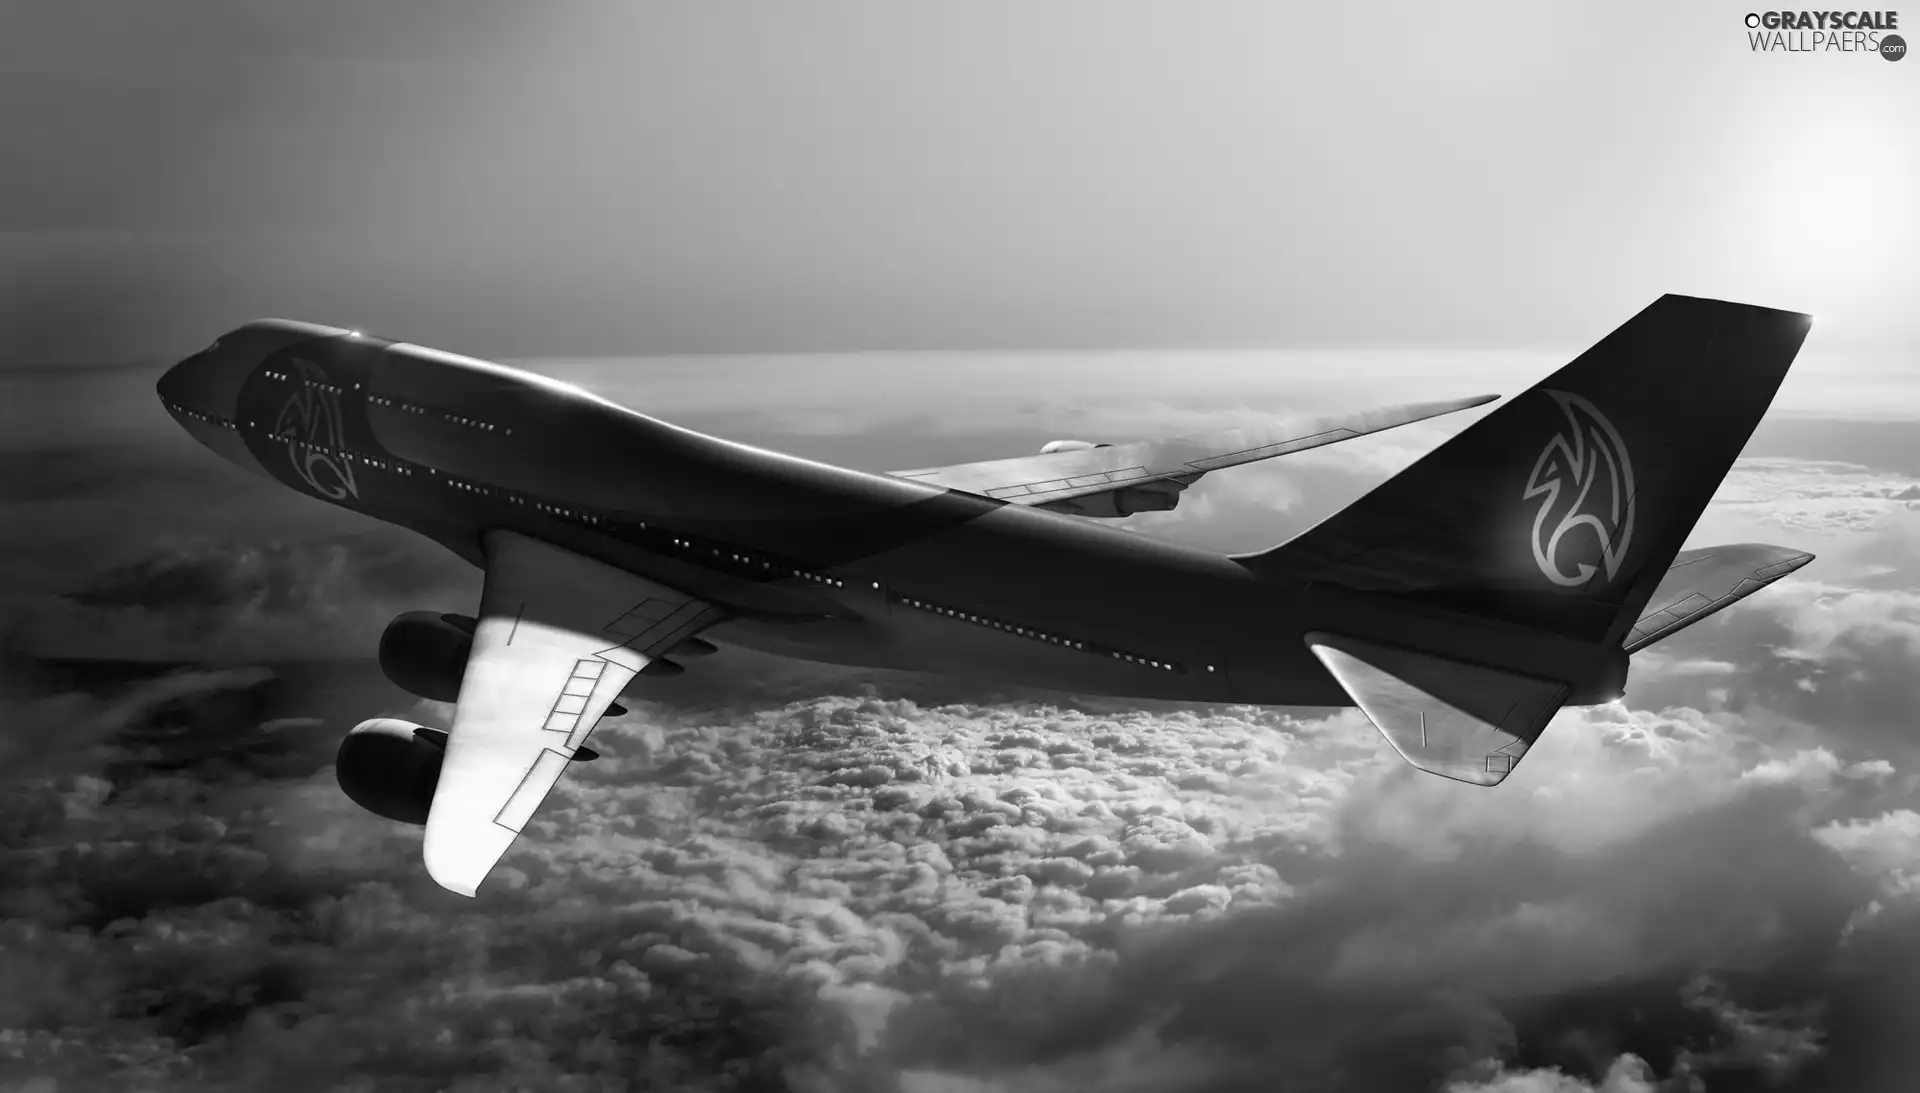 plane, 747, clouds, Boeing